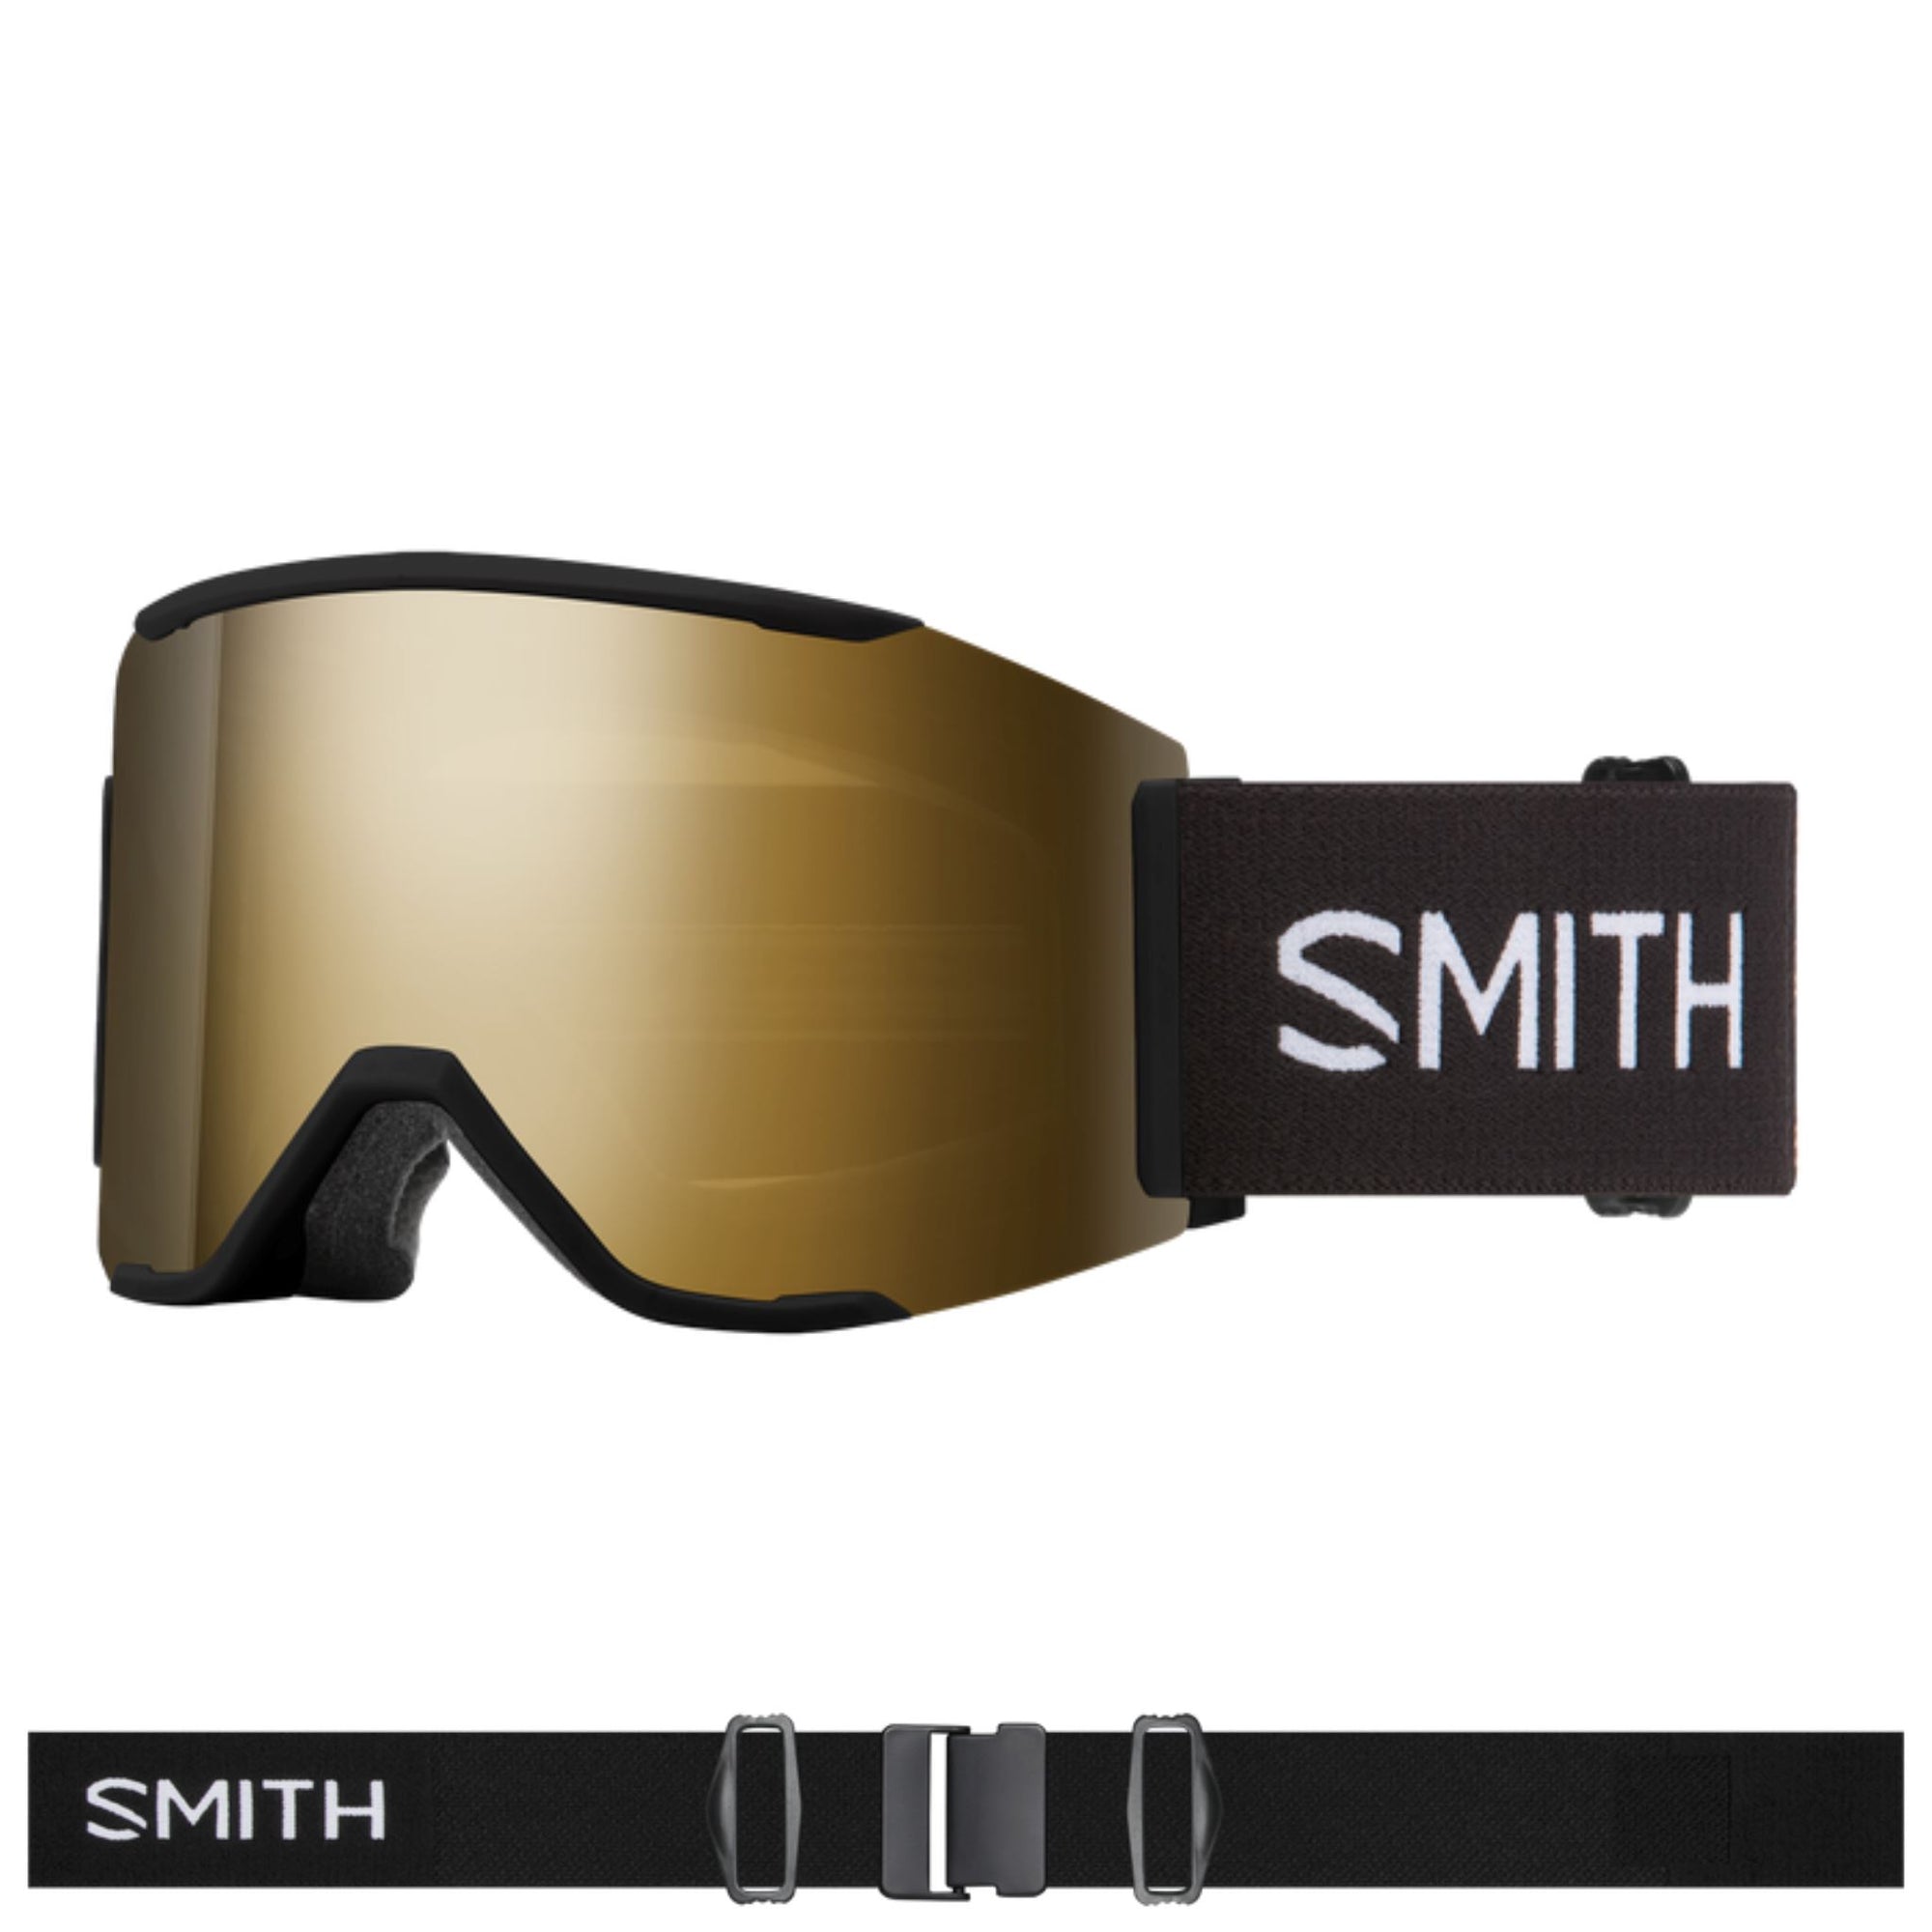 Smith Squad XL Goggles (Large Fit) - Black ChromaPop Sun Black Gold Mirror Goggles Smith 